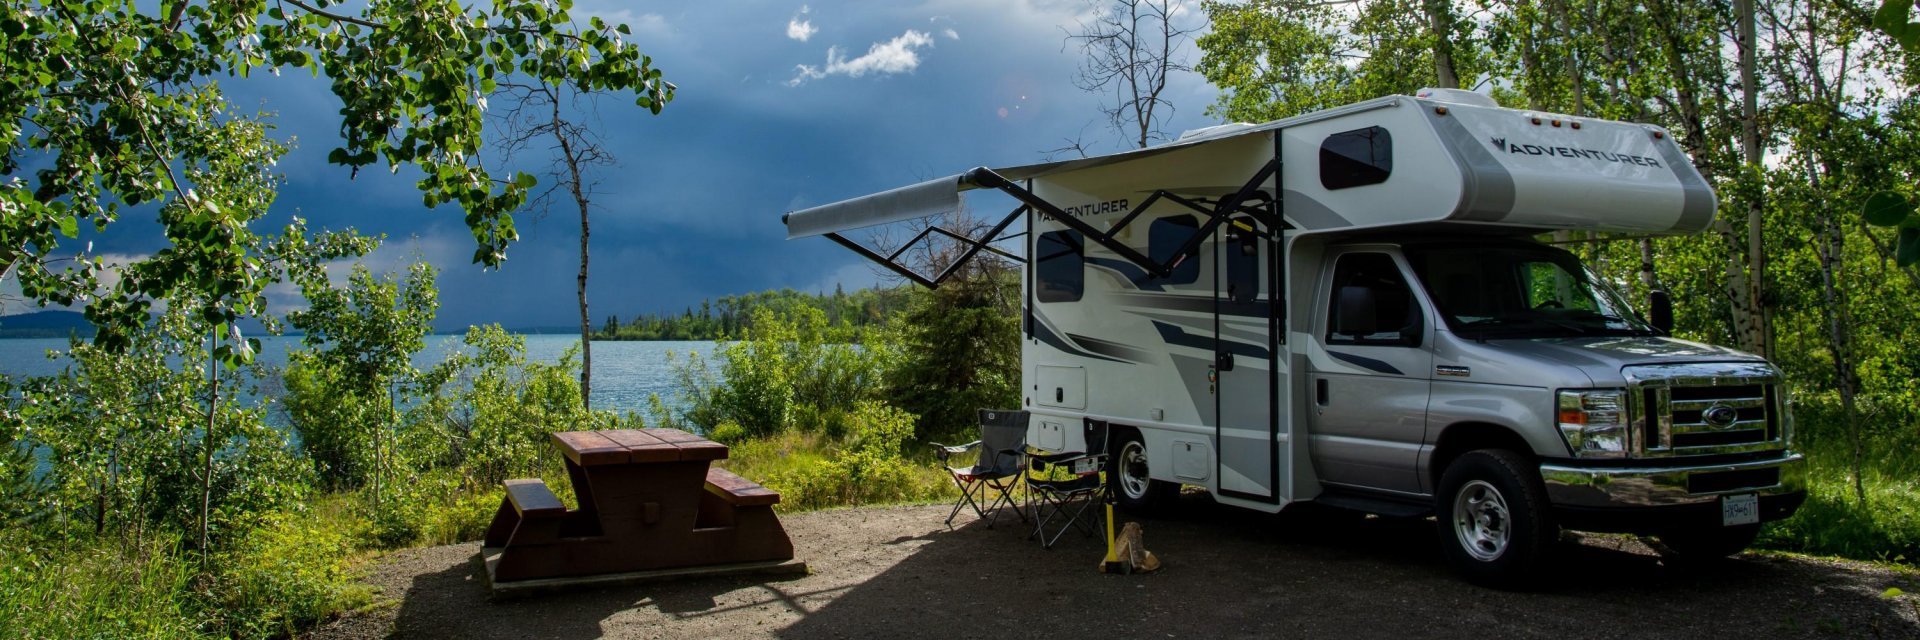 C-Medium Fraserway camper op campsite.